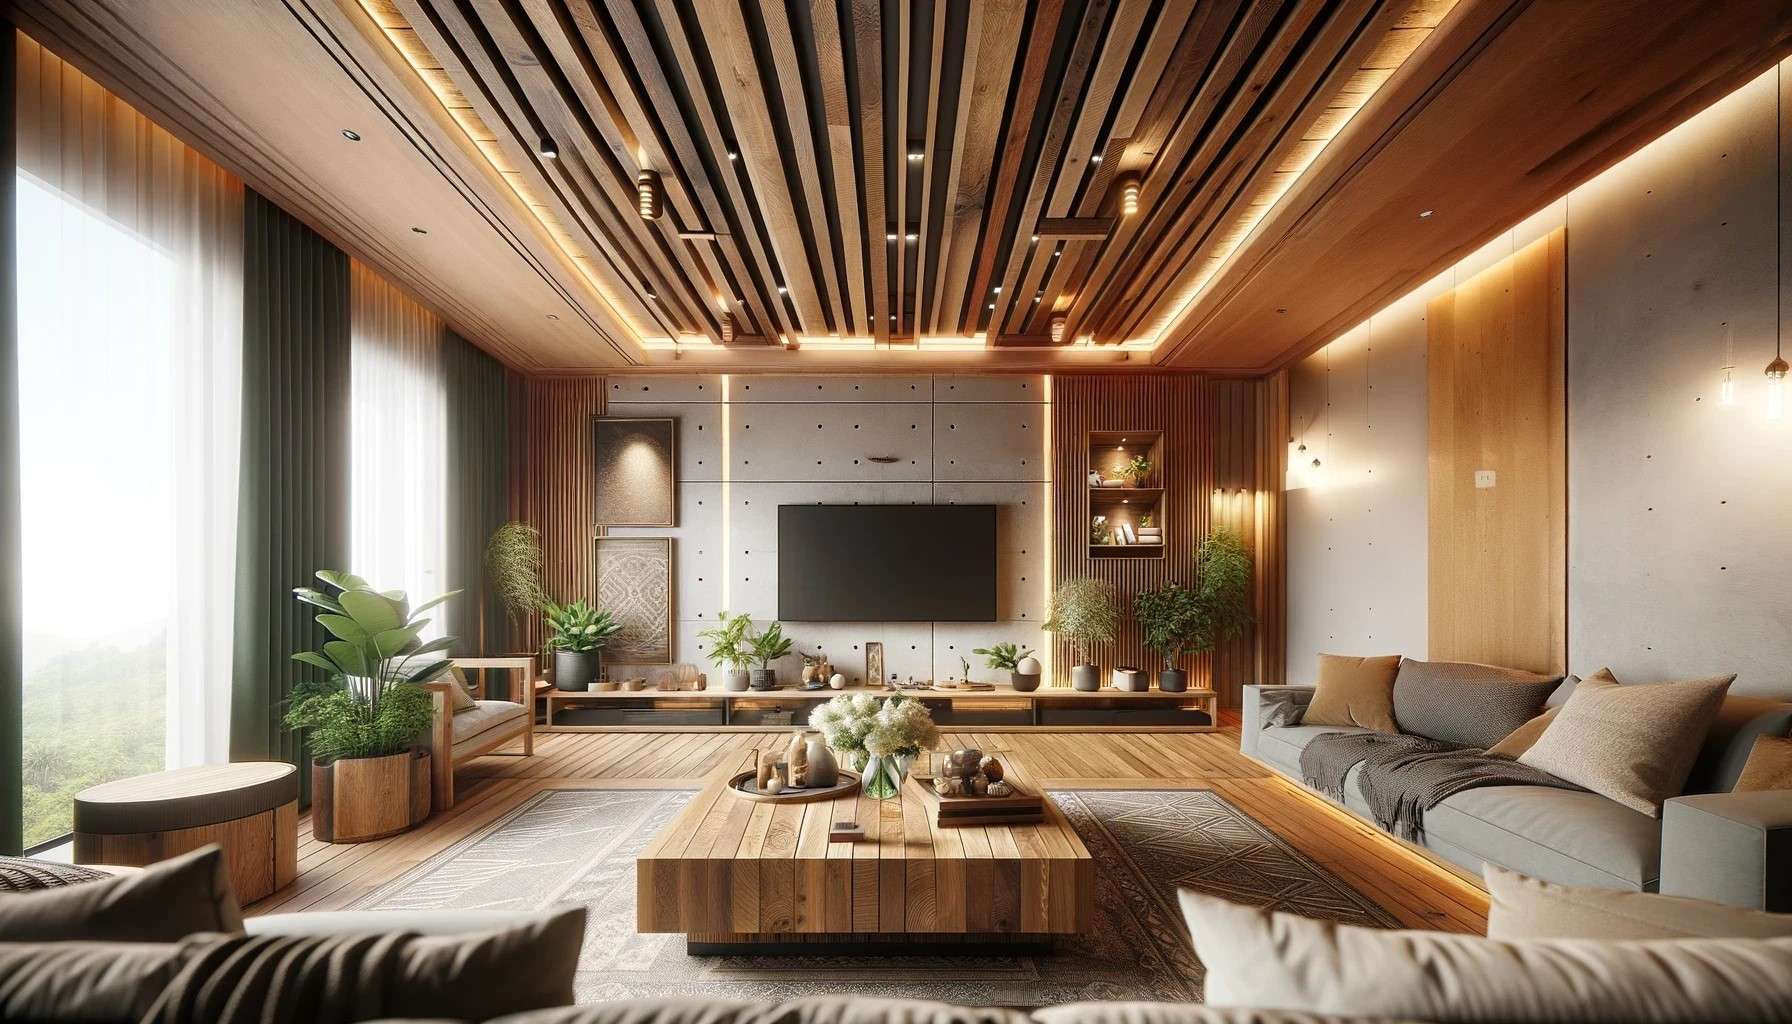 Wooden False Ceiling Design